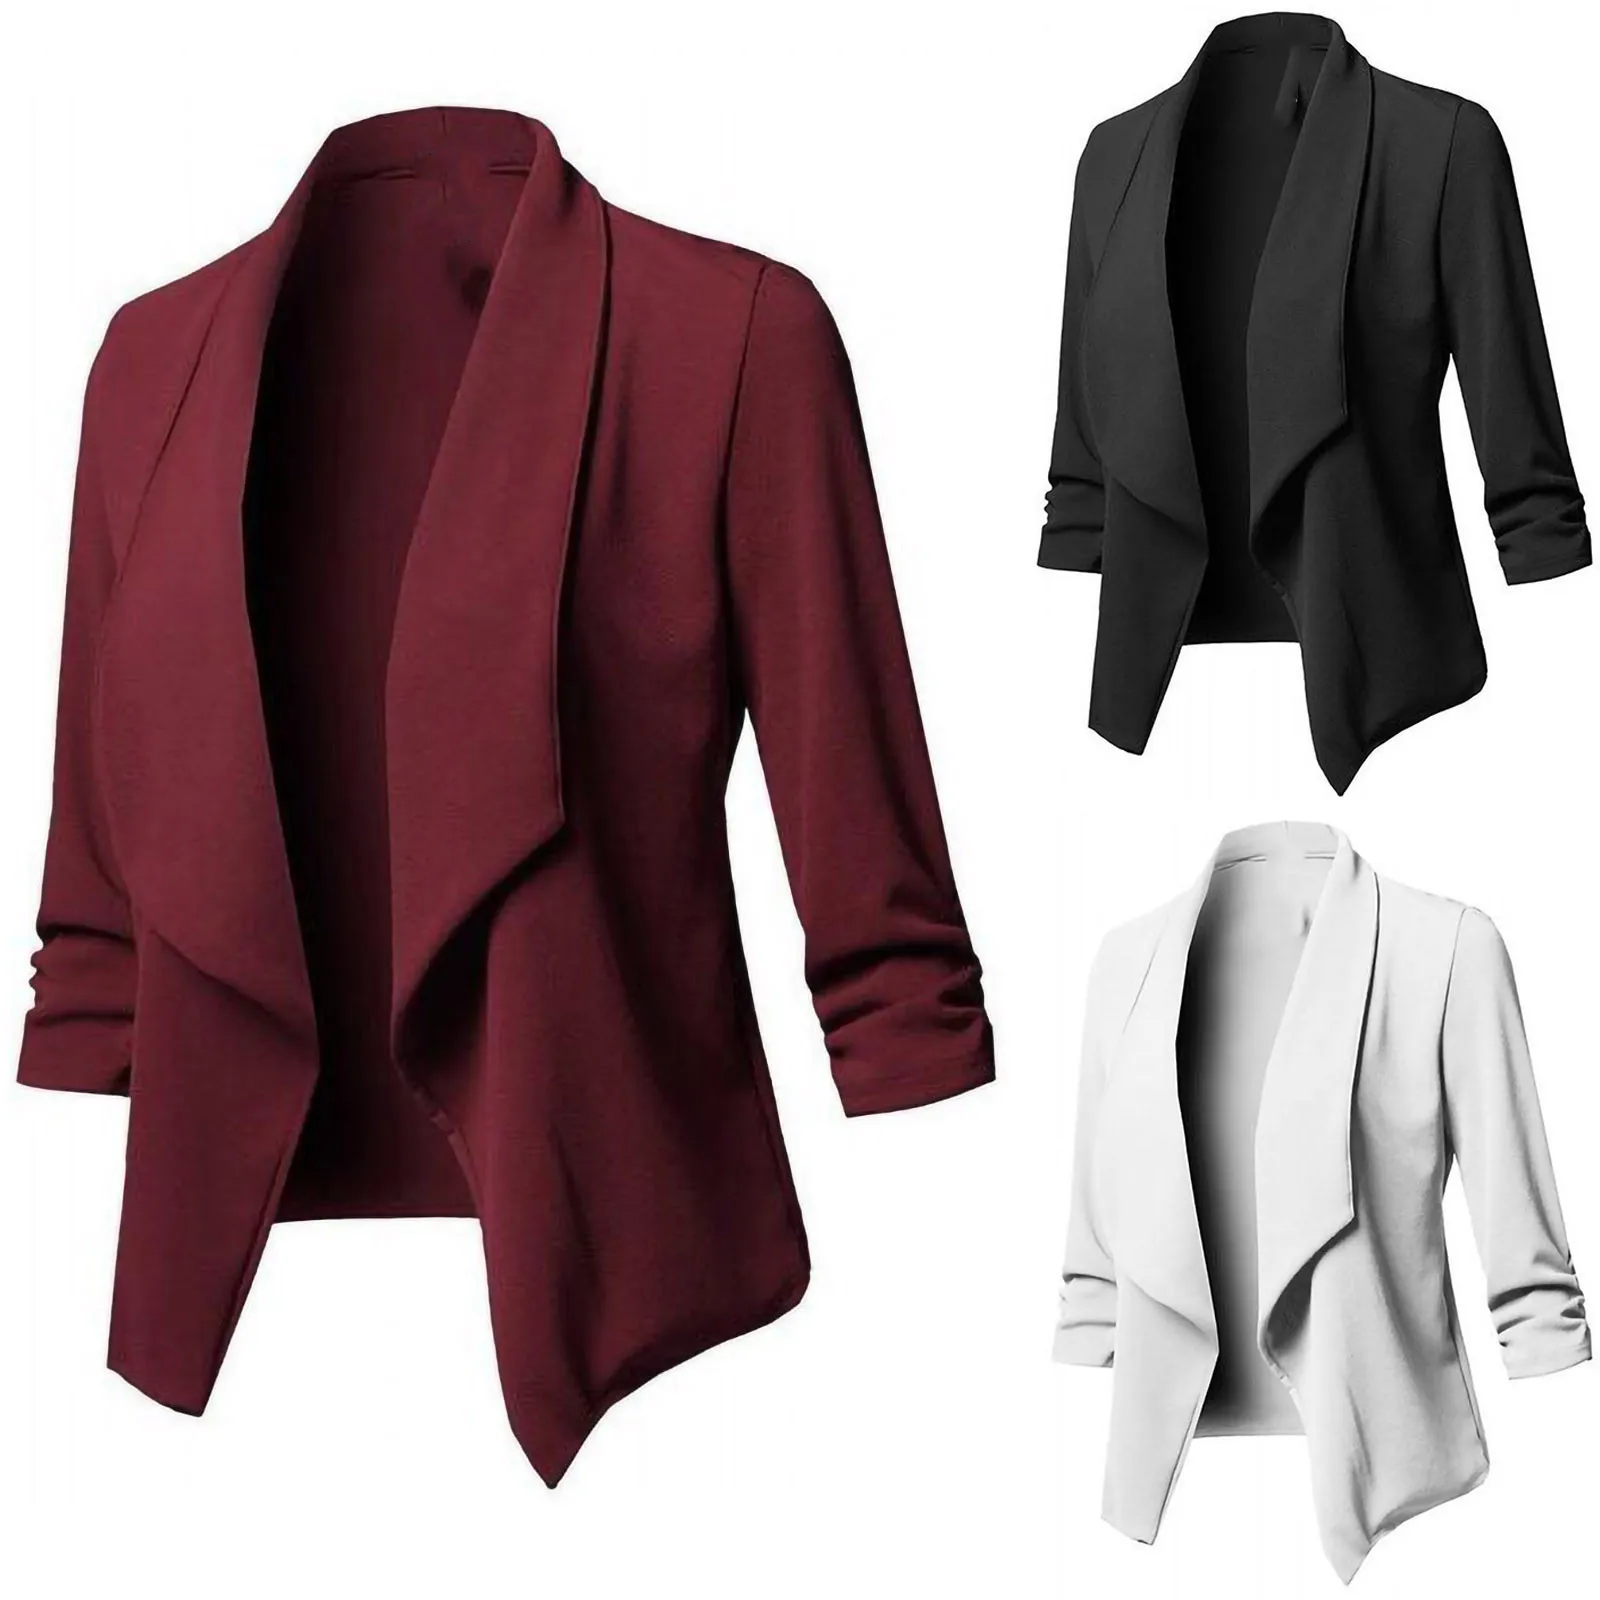 

Black Women Blazer 2021 Formal Blazers Lady Casual Office Work Suit Jacket Coat Slim Elegant Women Jackets Cardigan пиджак veste